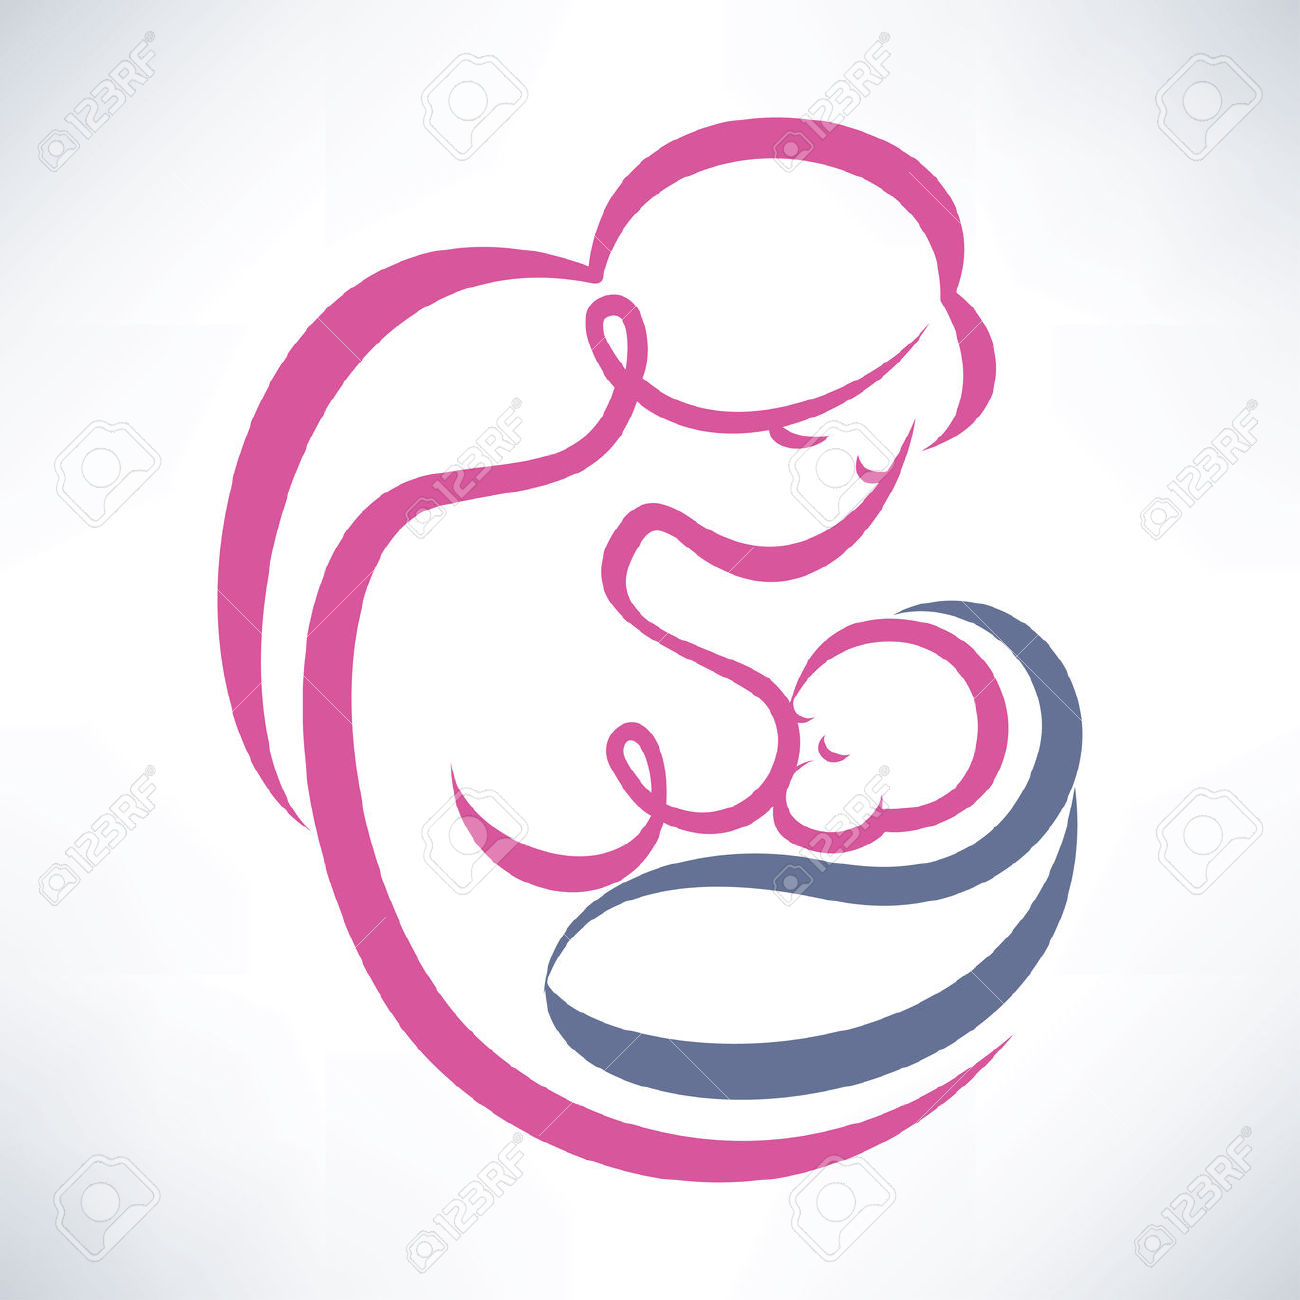 Vector - mother breastfeeding her baby stylized symbol